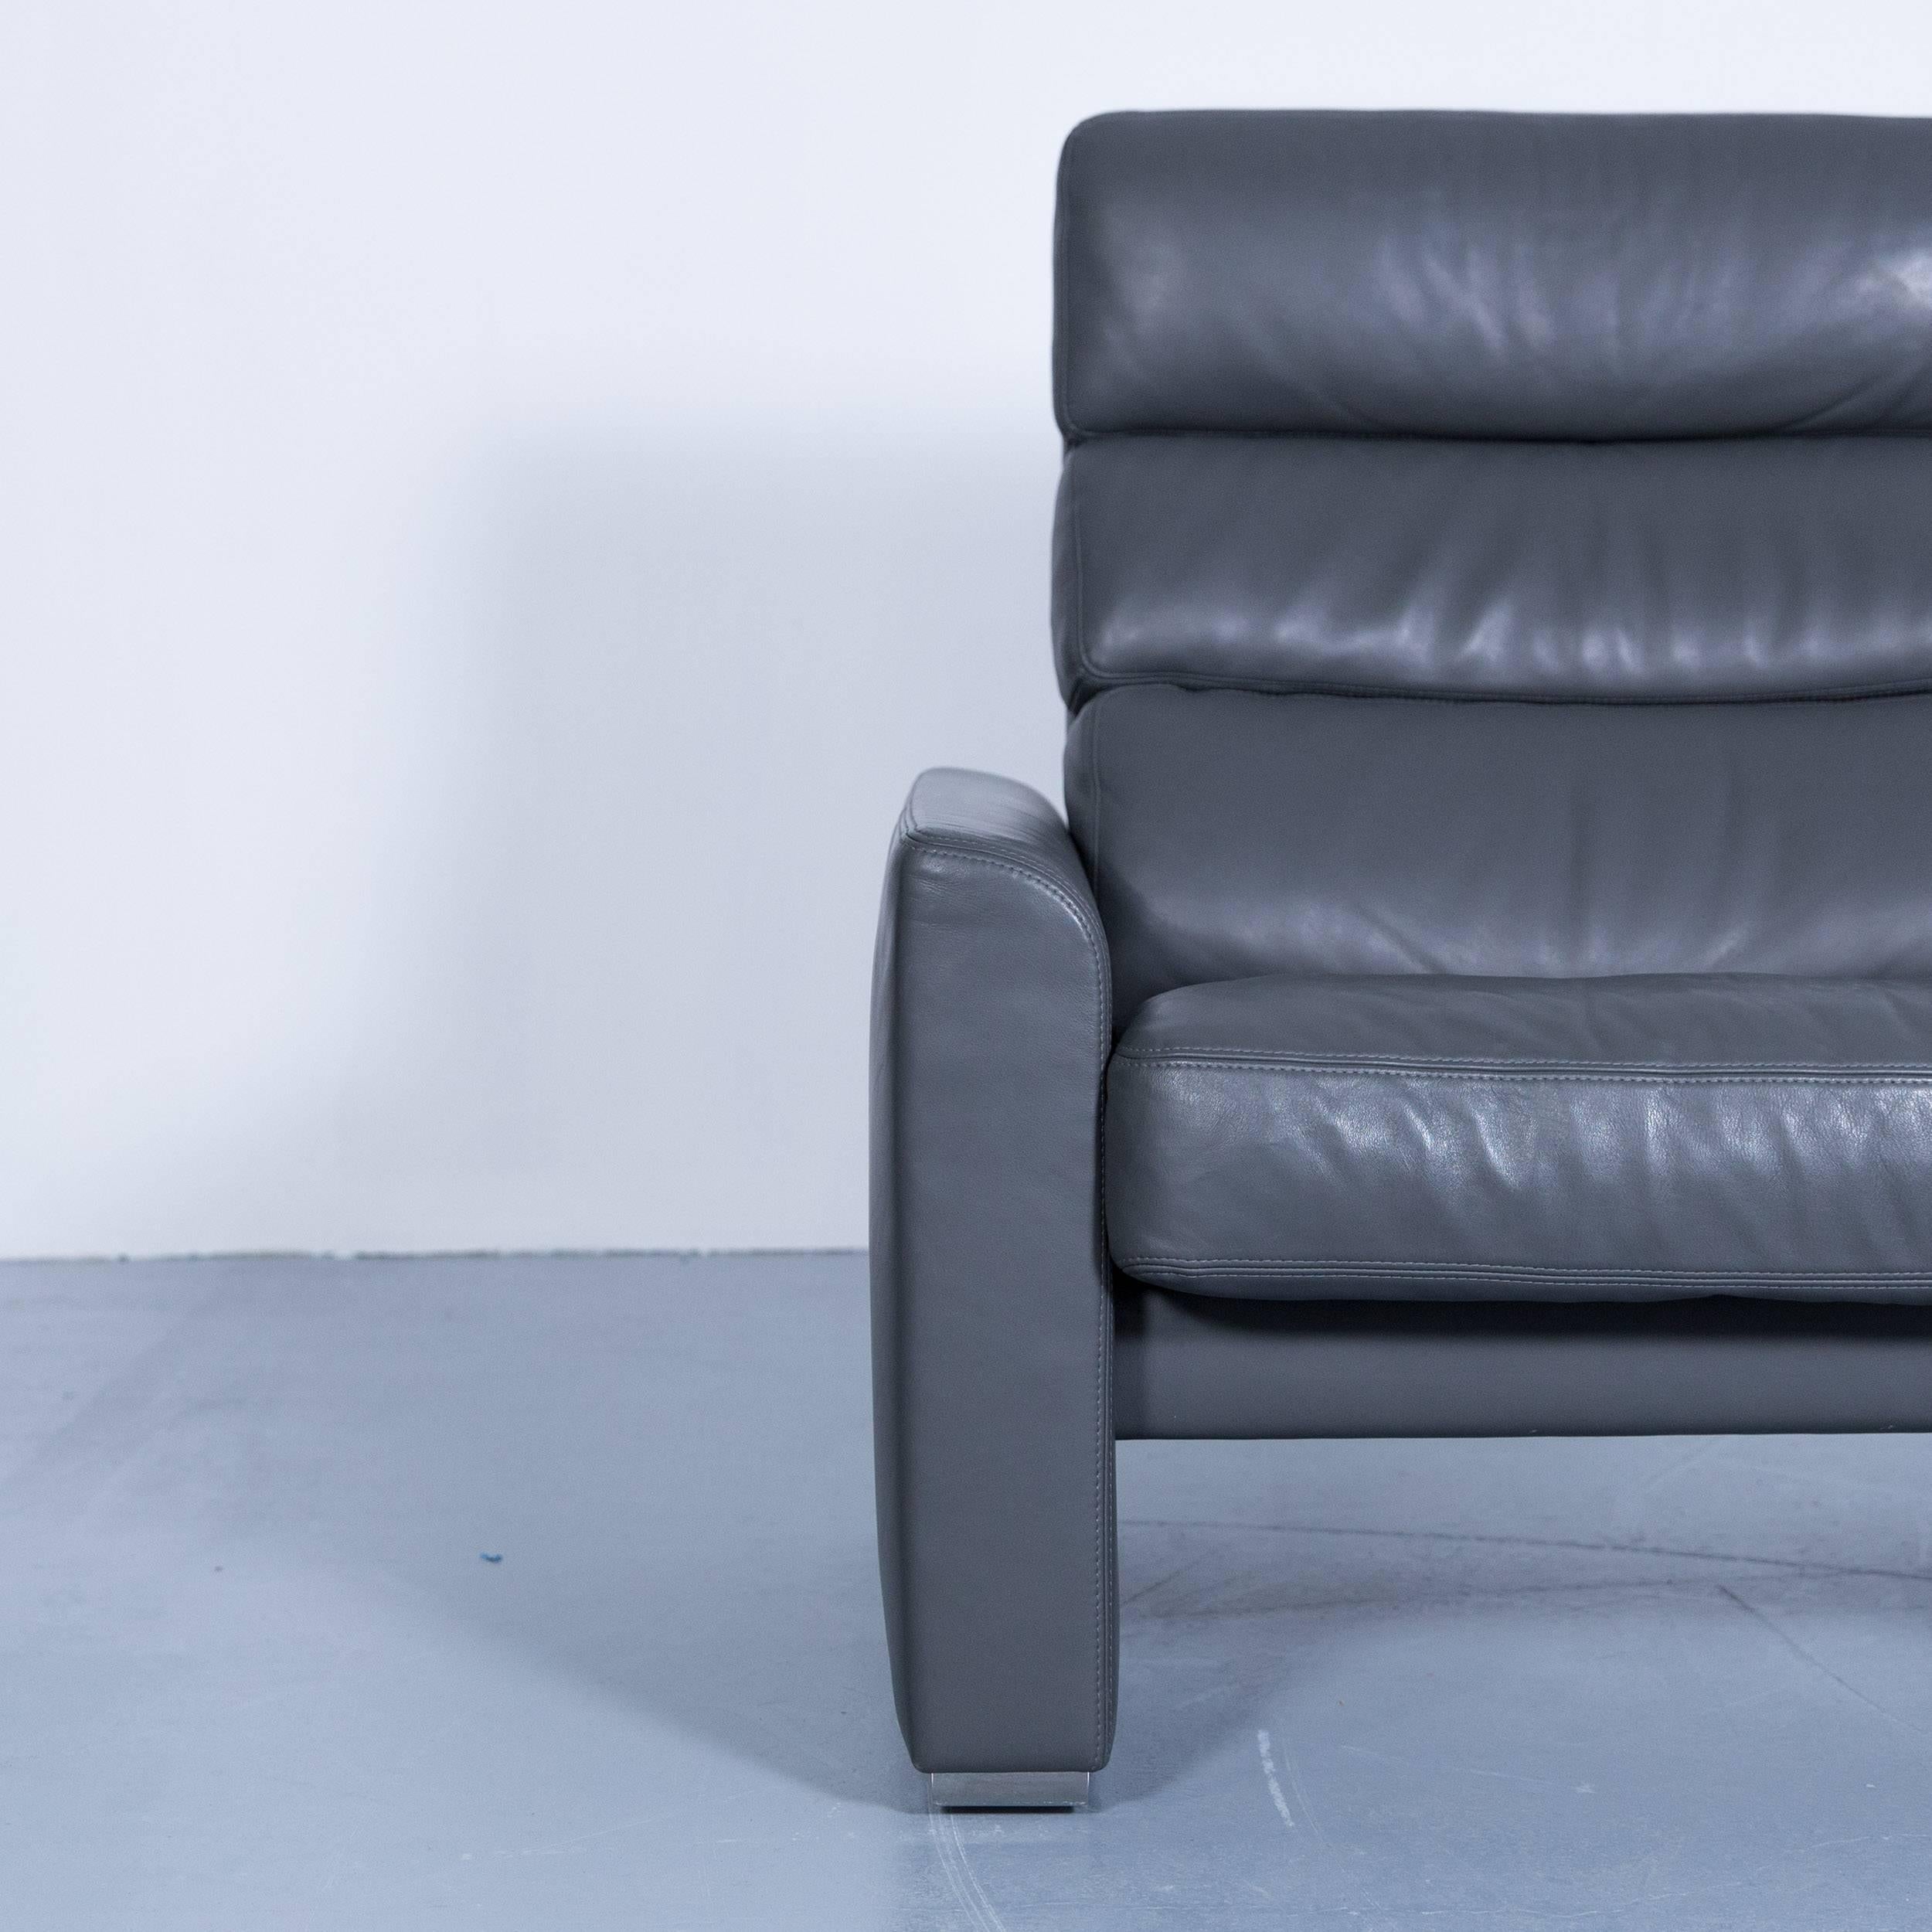 German Erpo Soho Designer Armchair Leather Grey Anthracite One Seat Modern Function